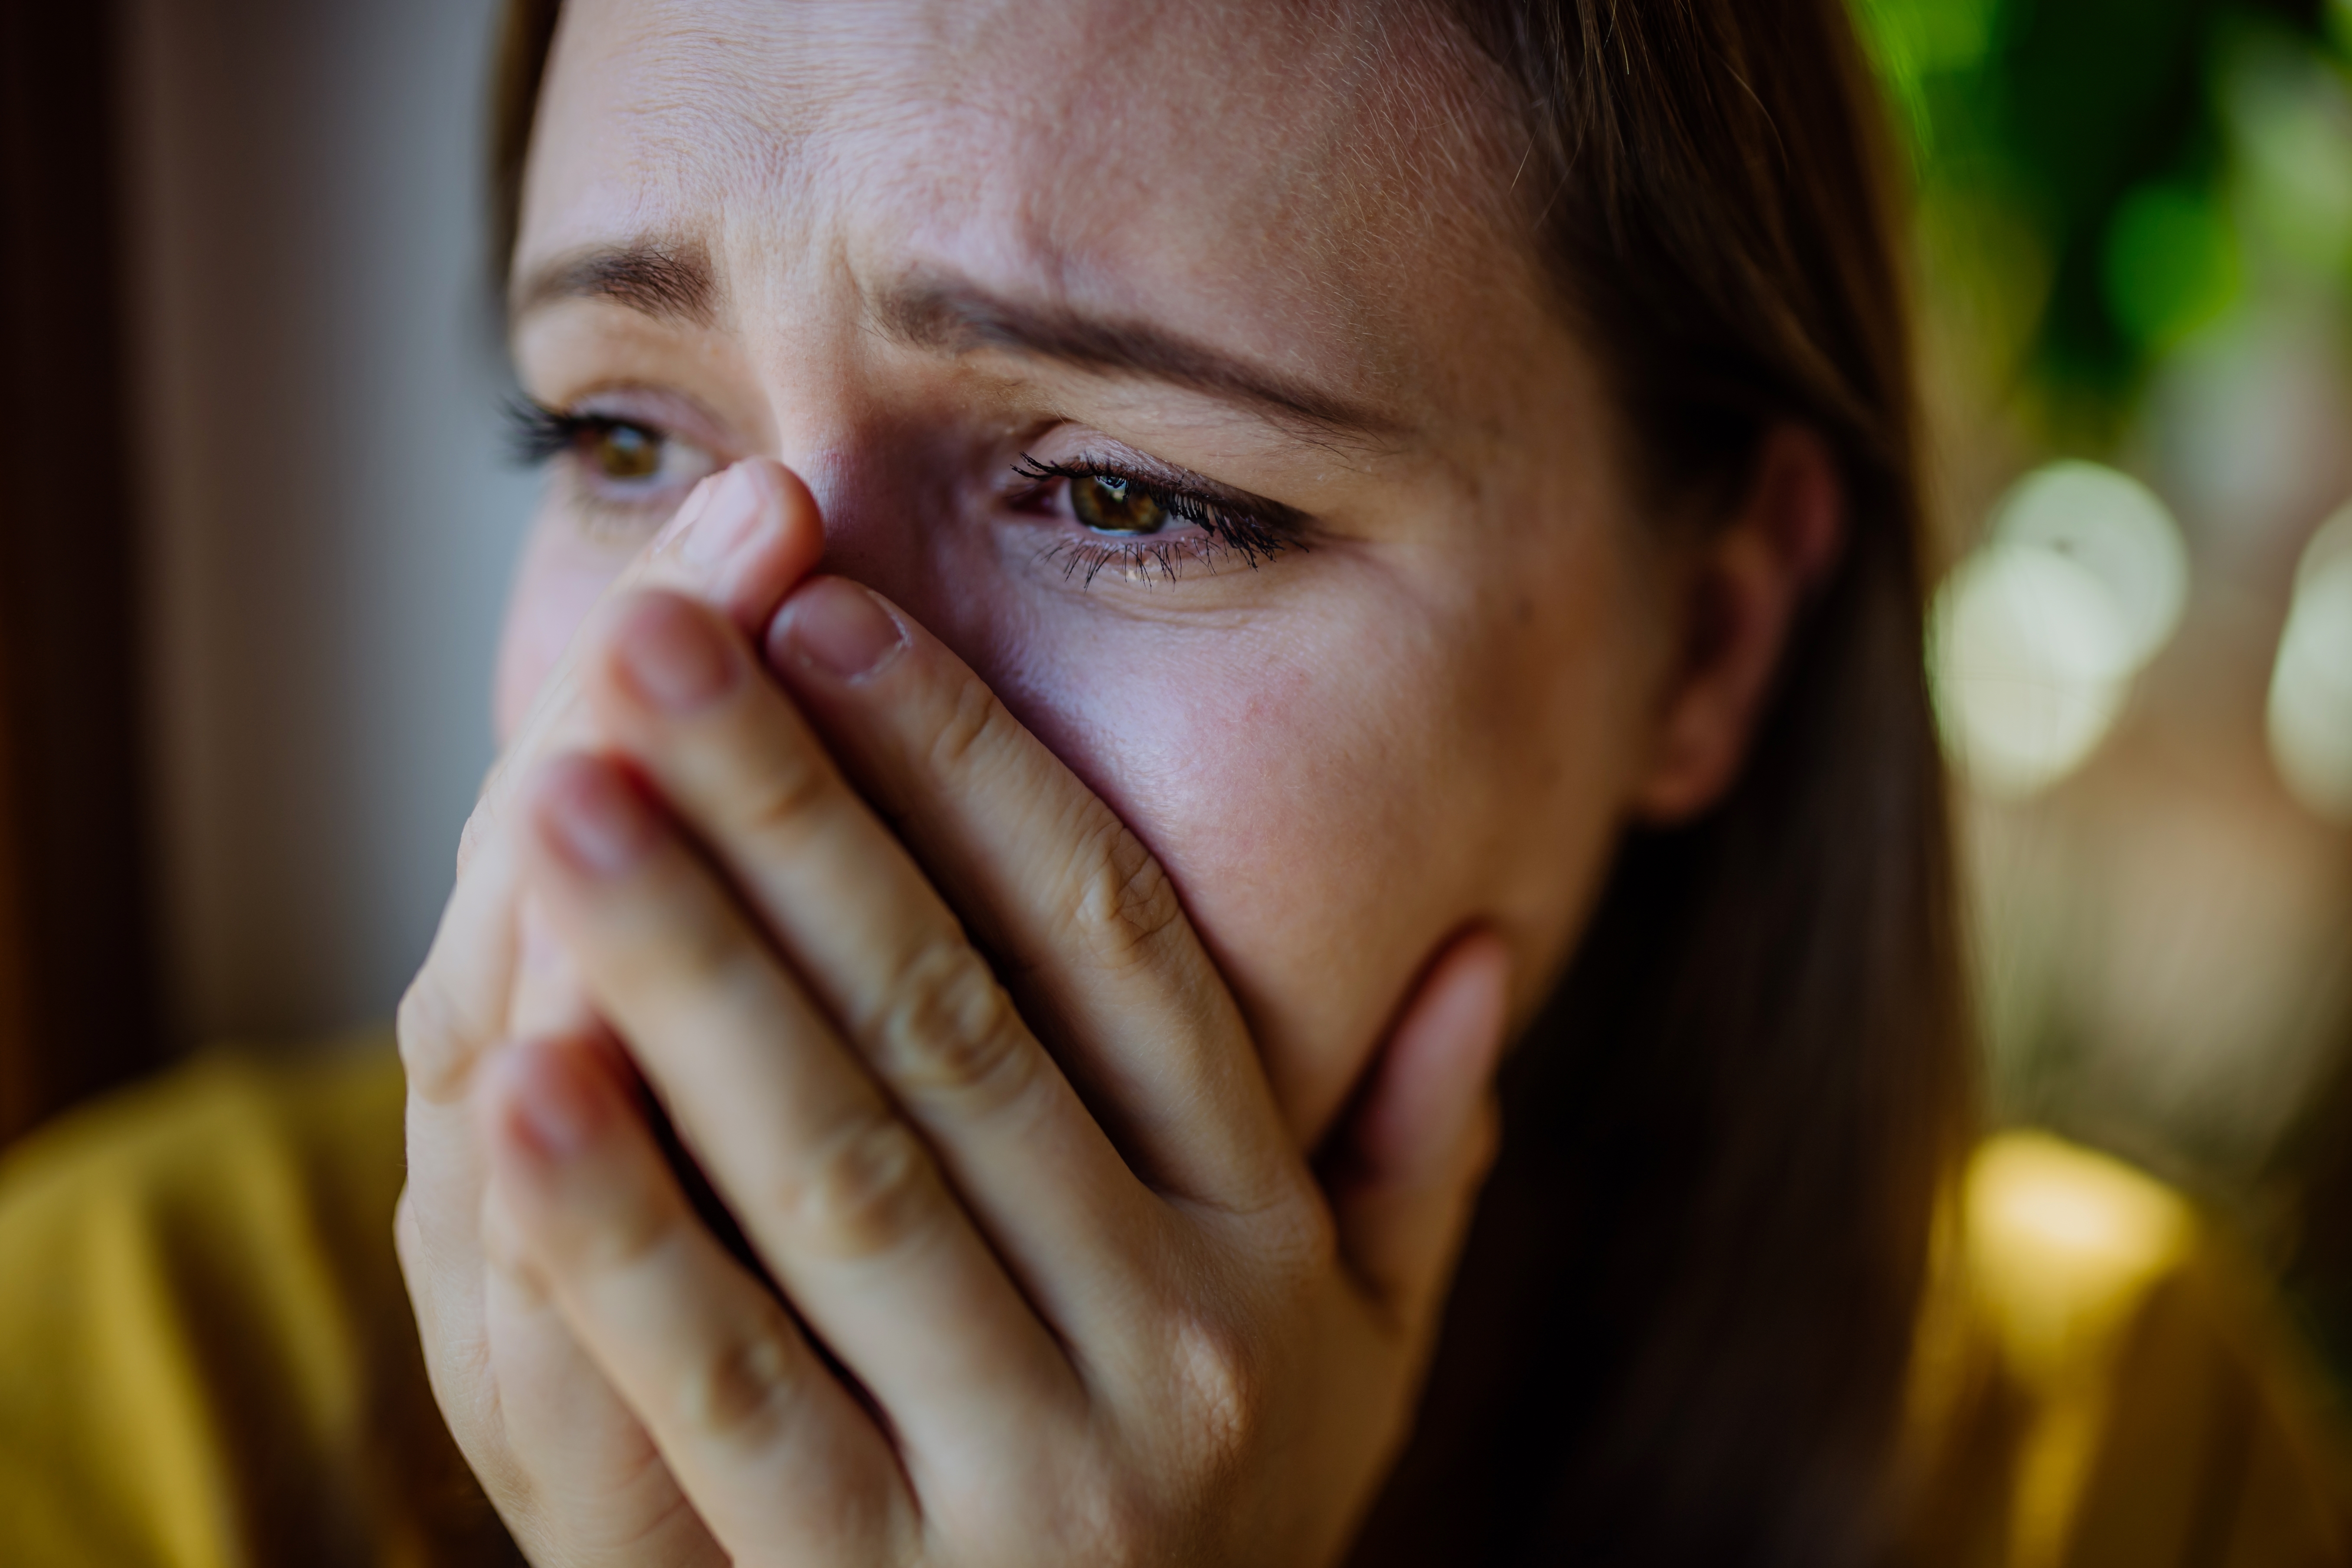 Crying woman. | Source: Shutterstock